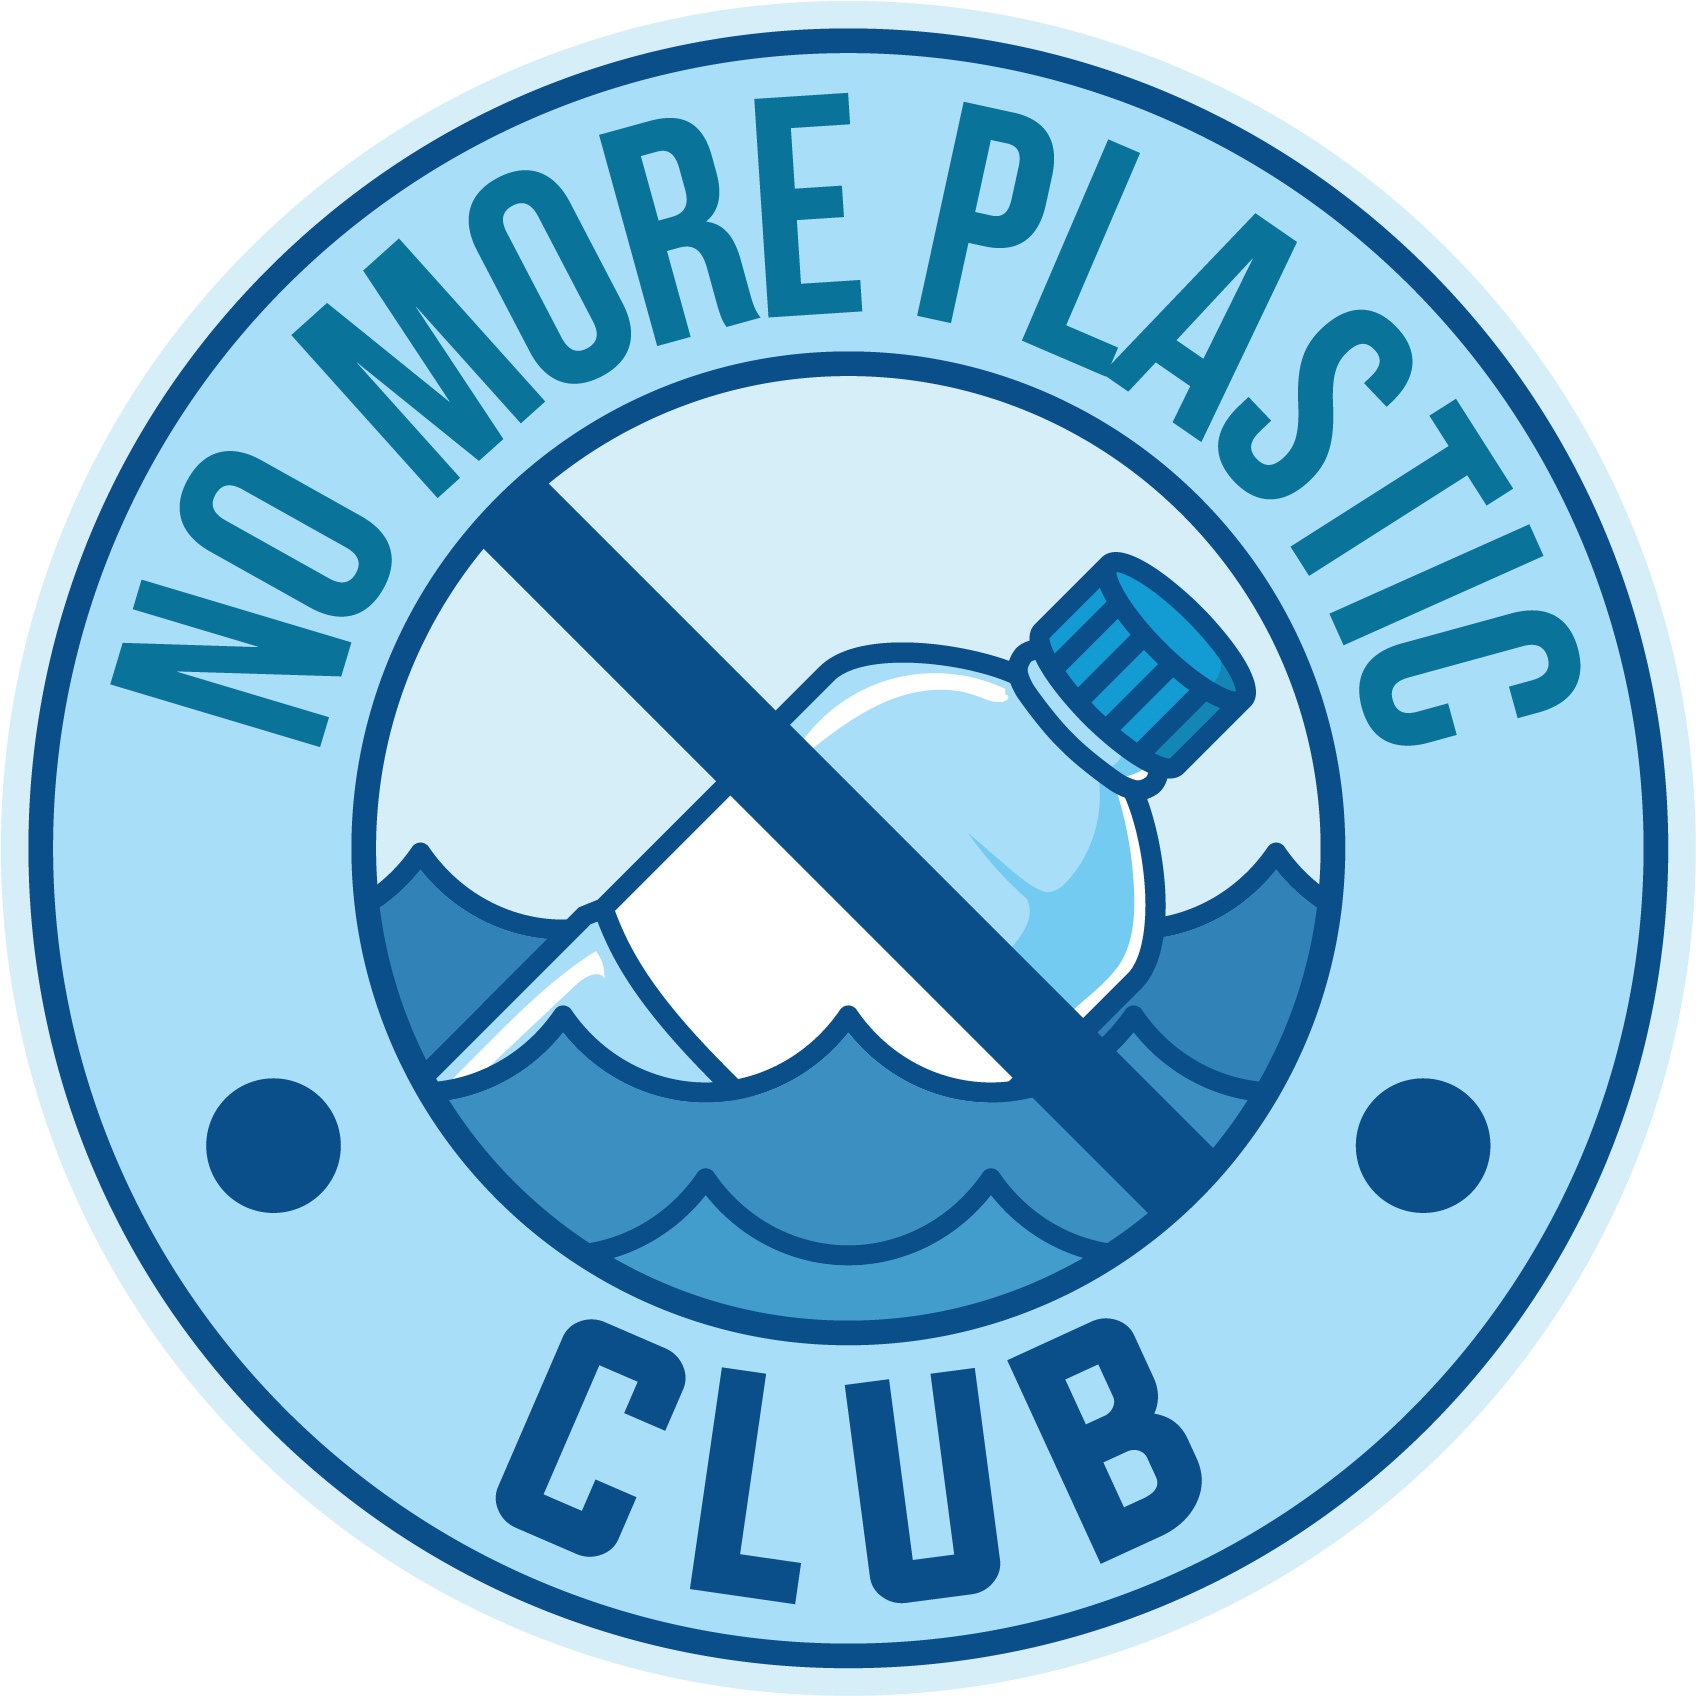 No More Plastic Club - No More Plastic (1859x1859)